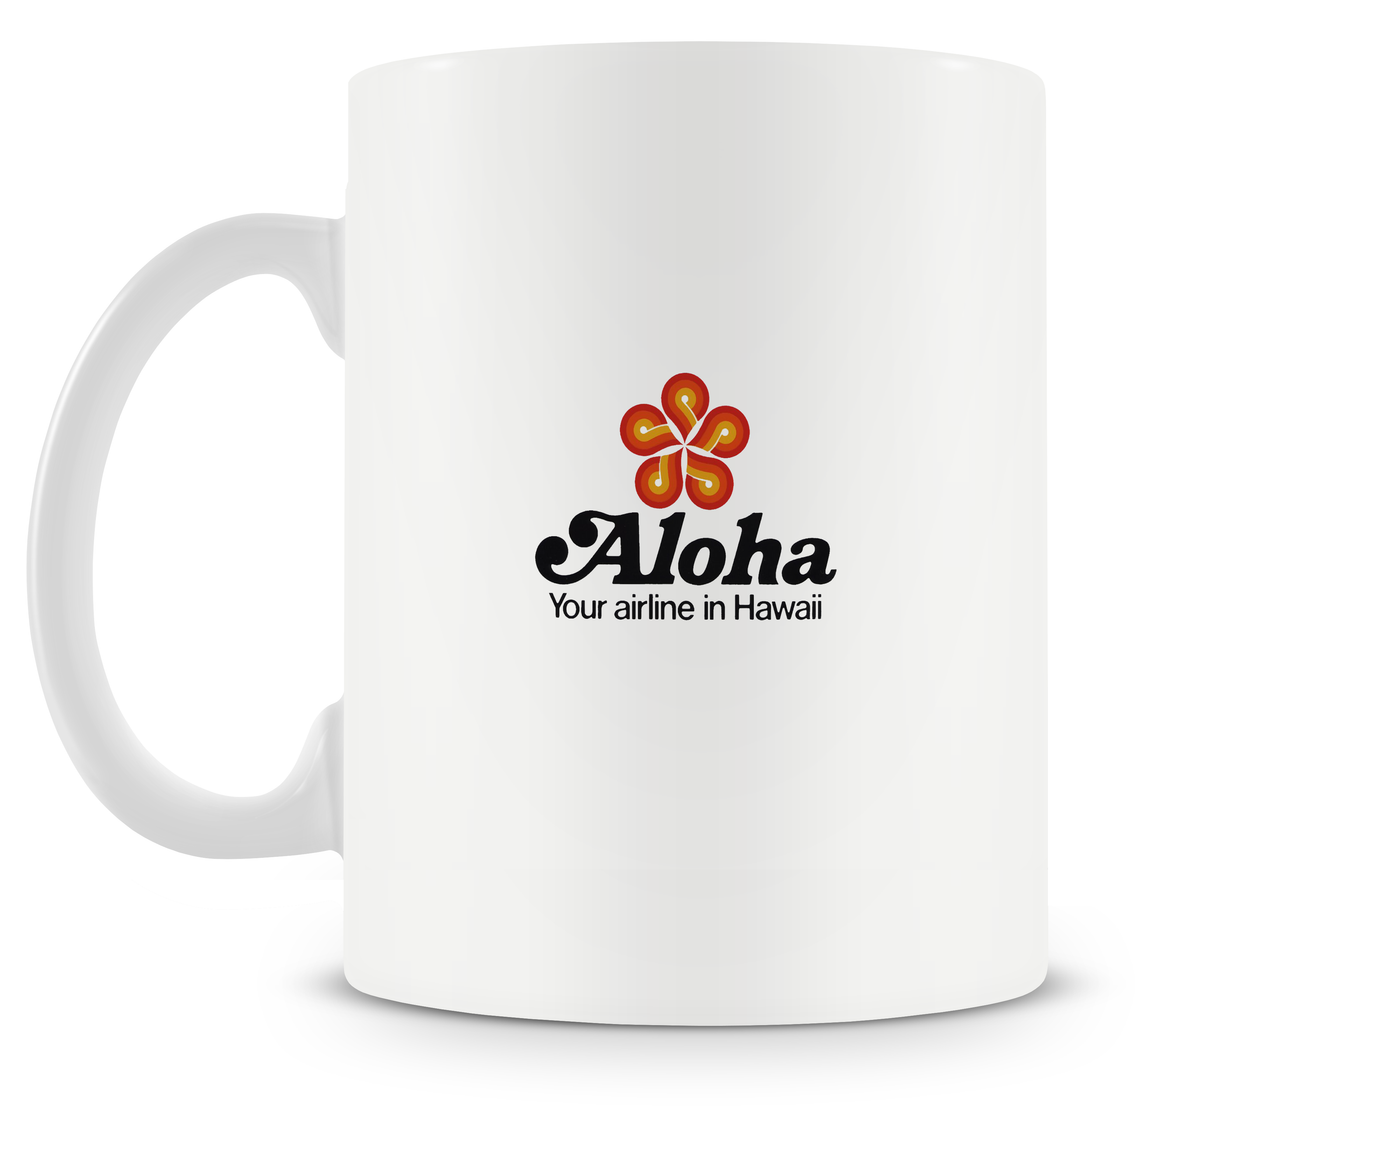 Aloha Airlines Boeing 737 Mug - Aircraft Mugs